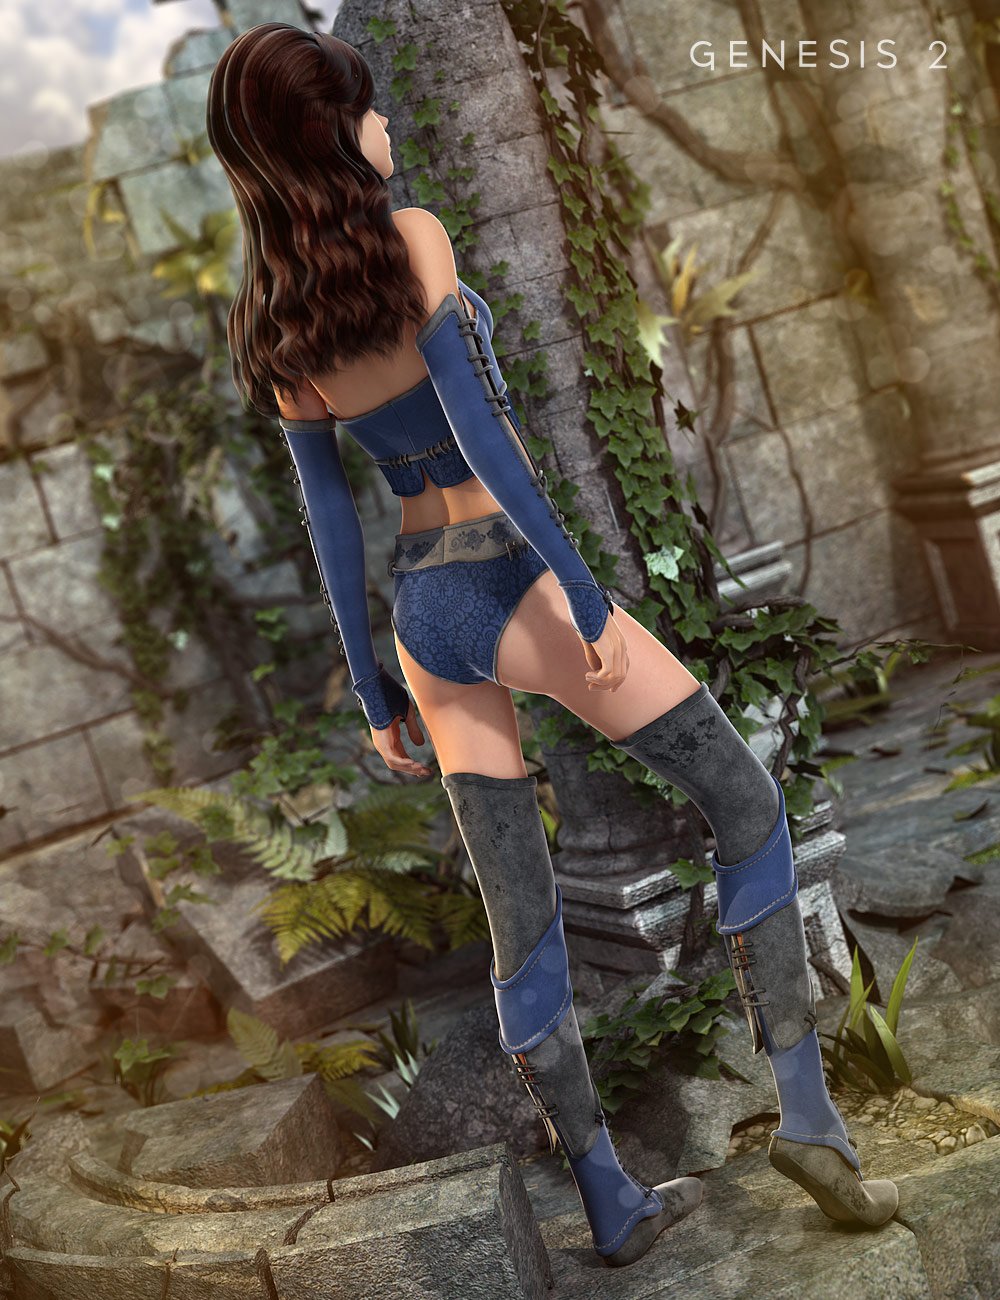 Faertara for Genesis 2 Female(s) by: Sarsa, 3D Models by Daz 3D